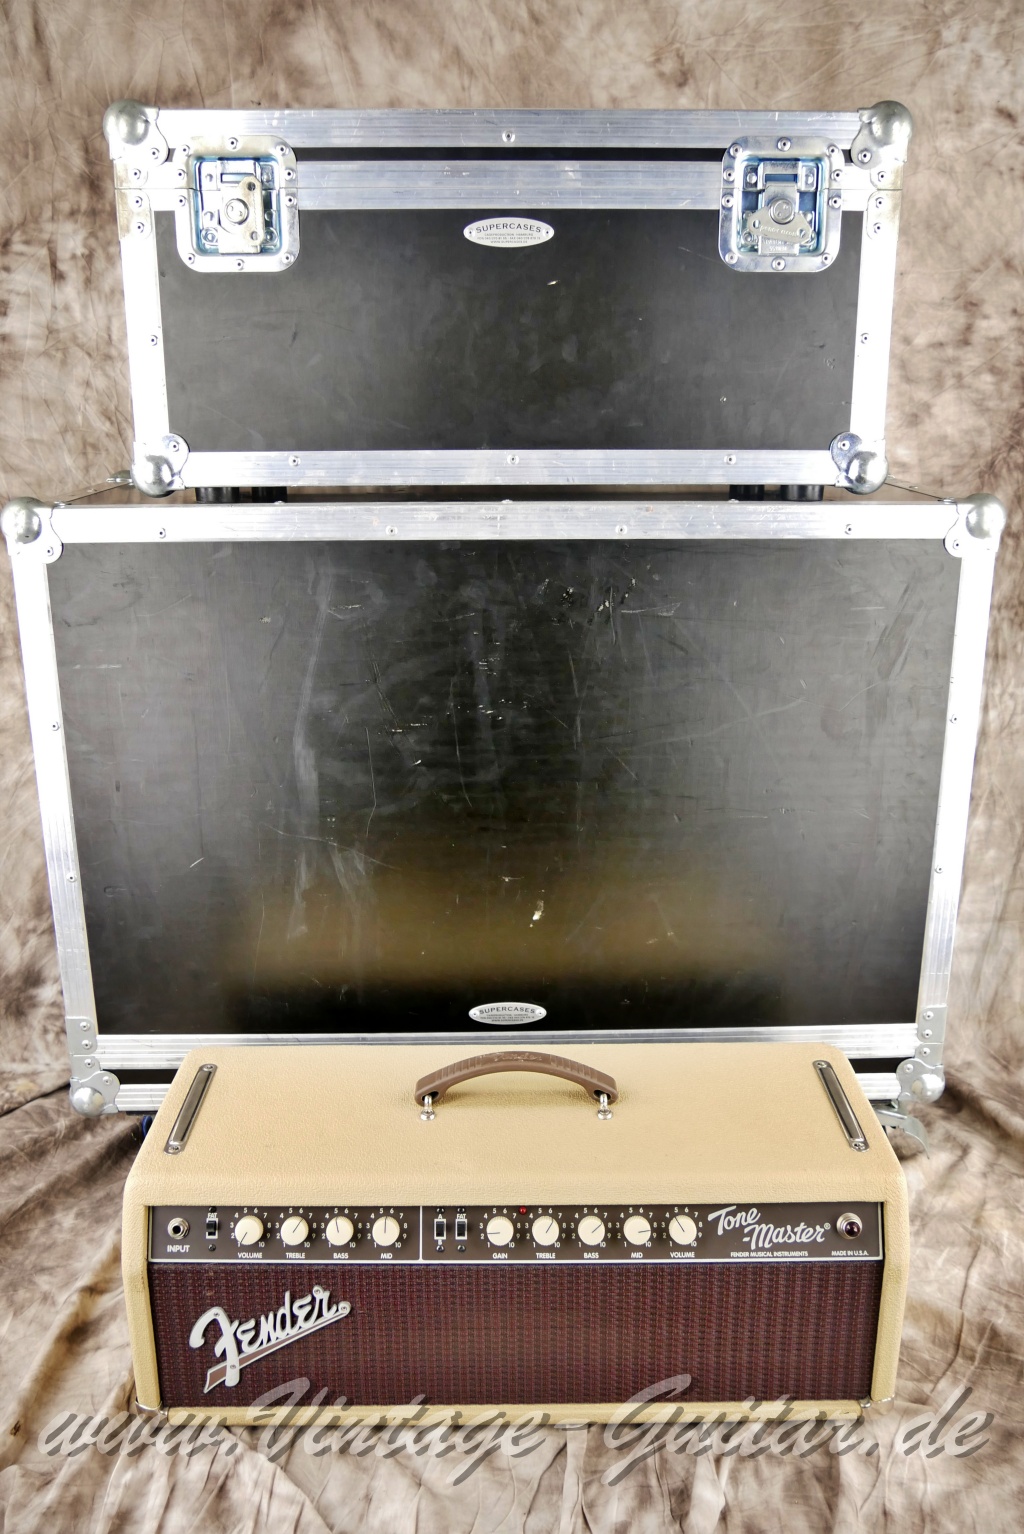 Fender-Tonemaster-top-and-cab-with-flightcases-1997-blonde-tolex-036.jpg